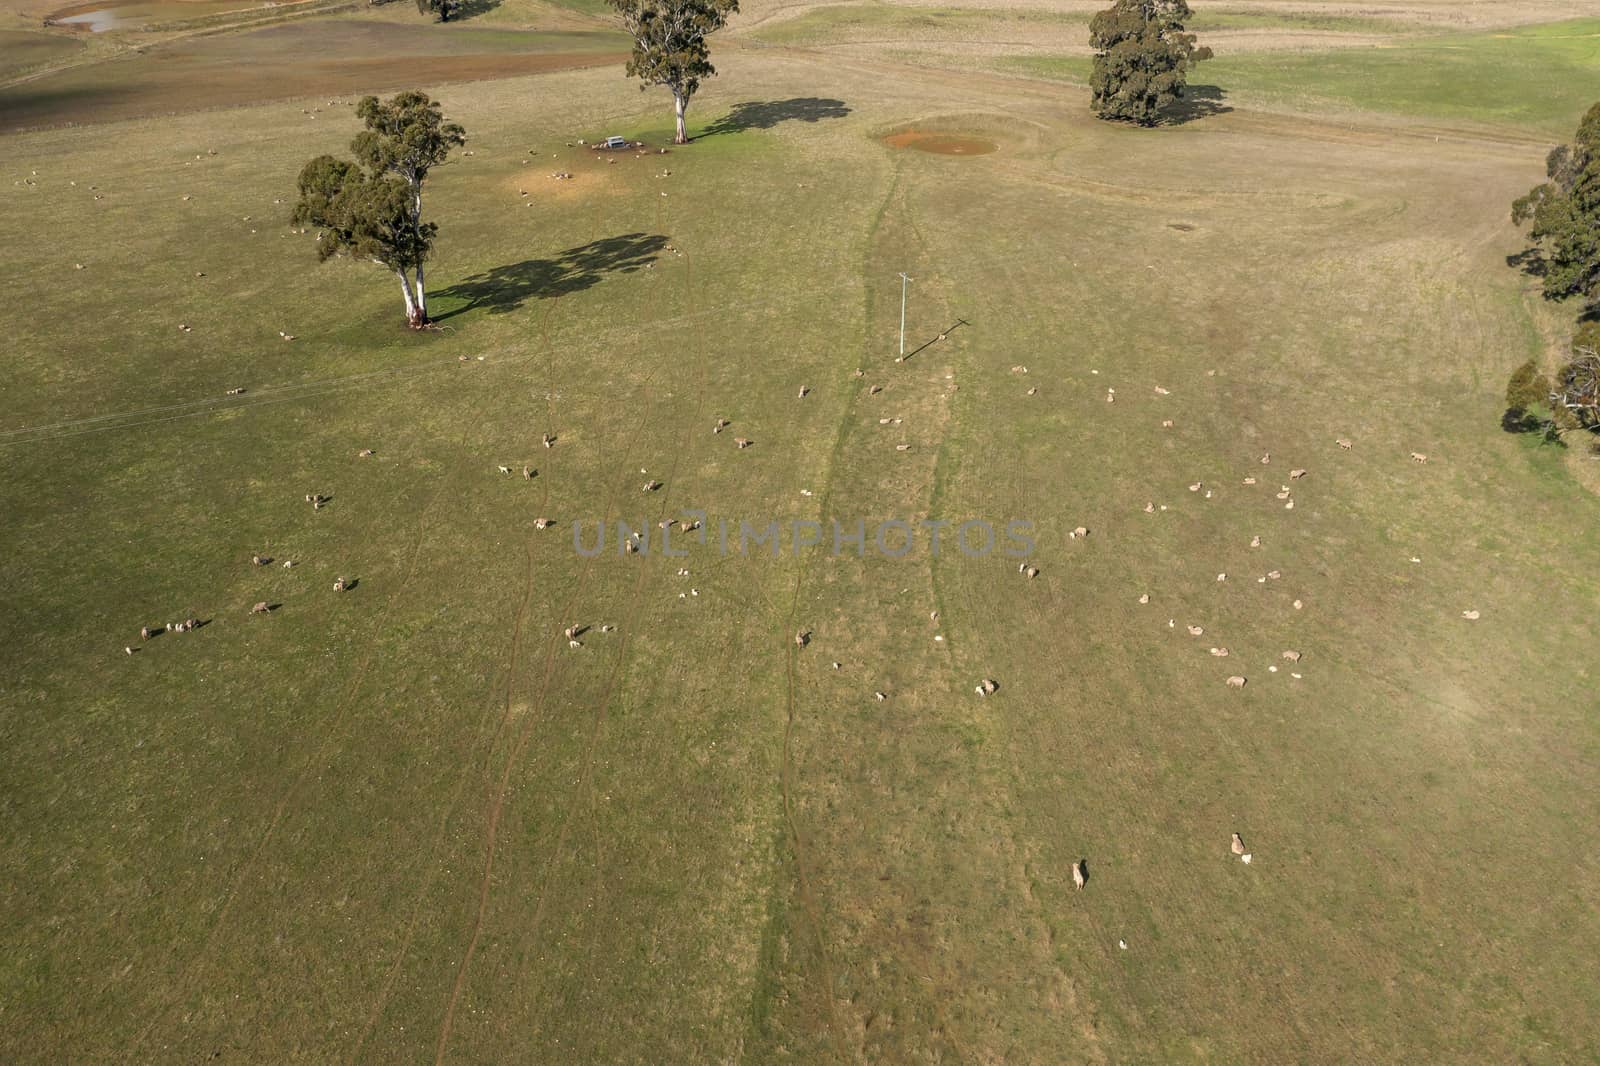 Sheep in a lush farming field in regional Australia